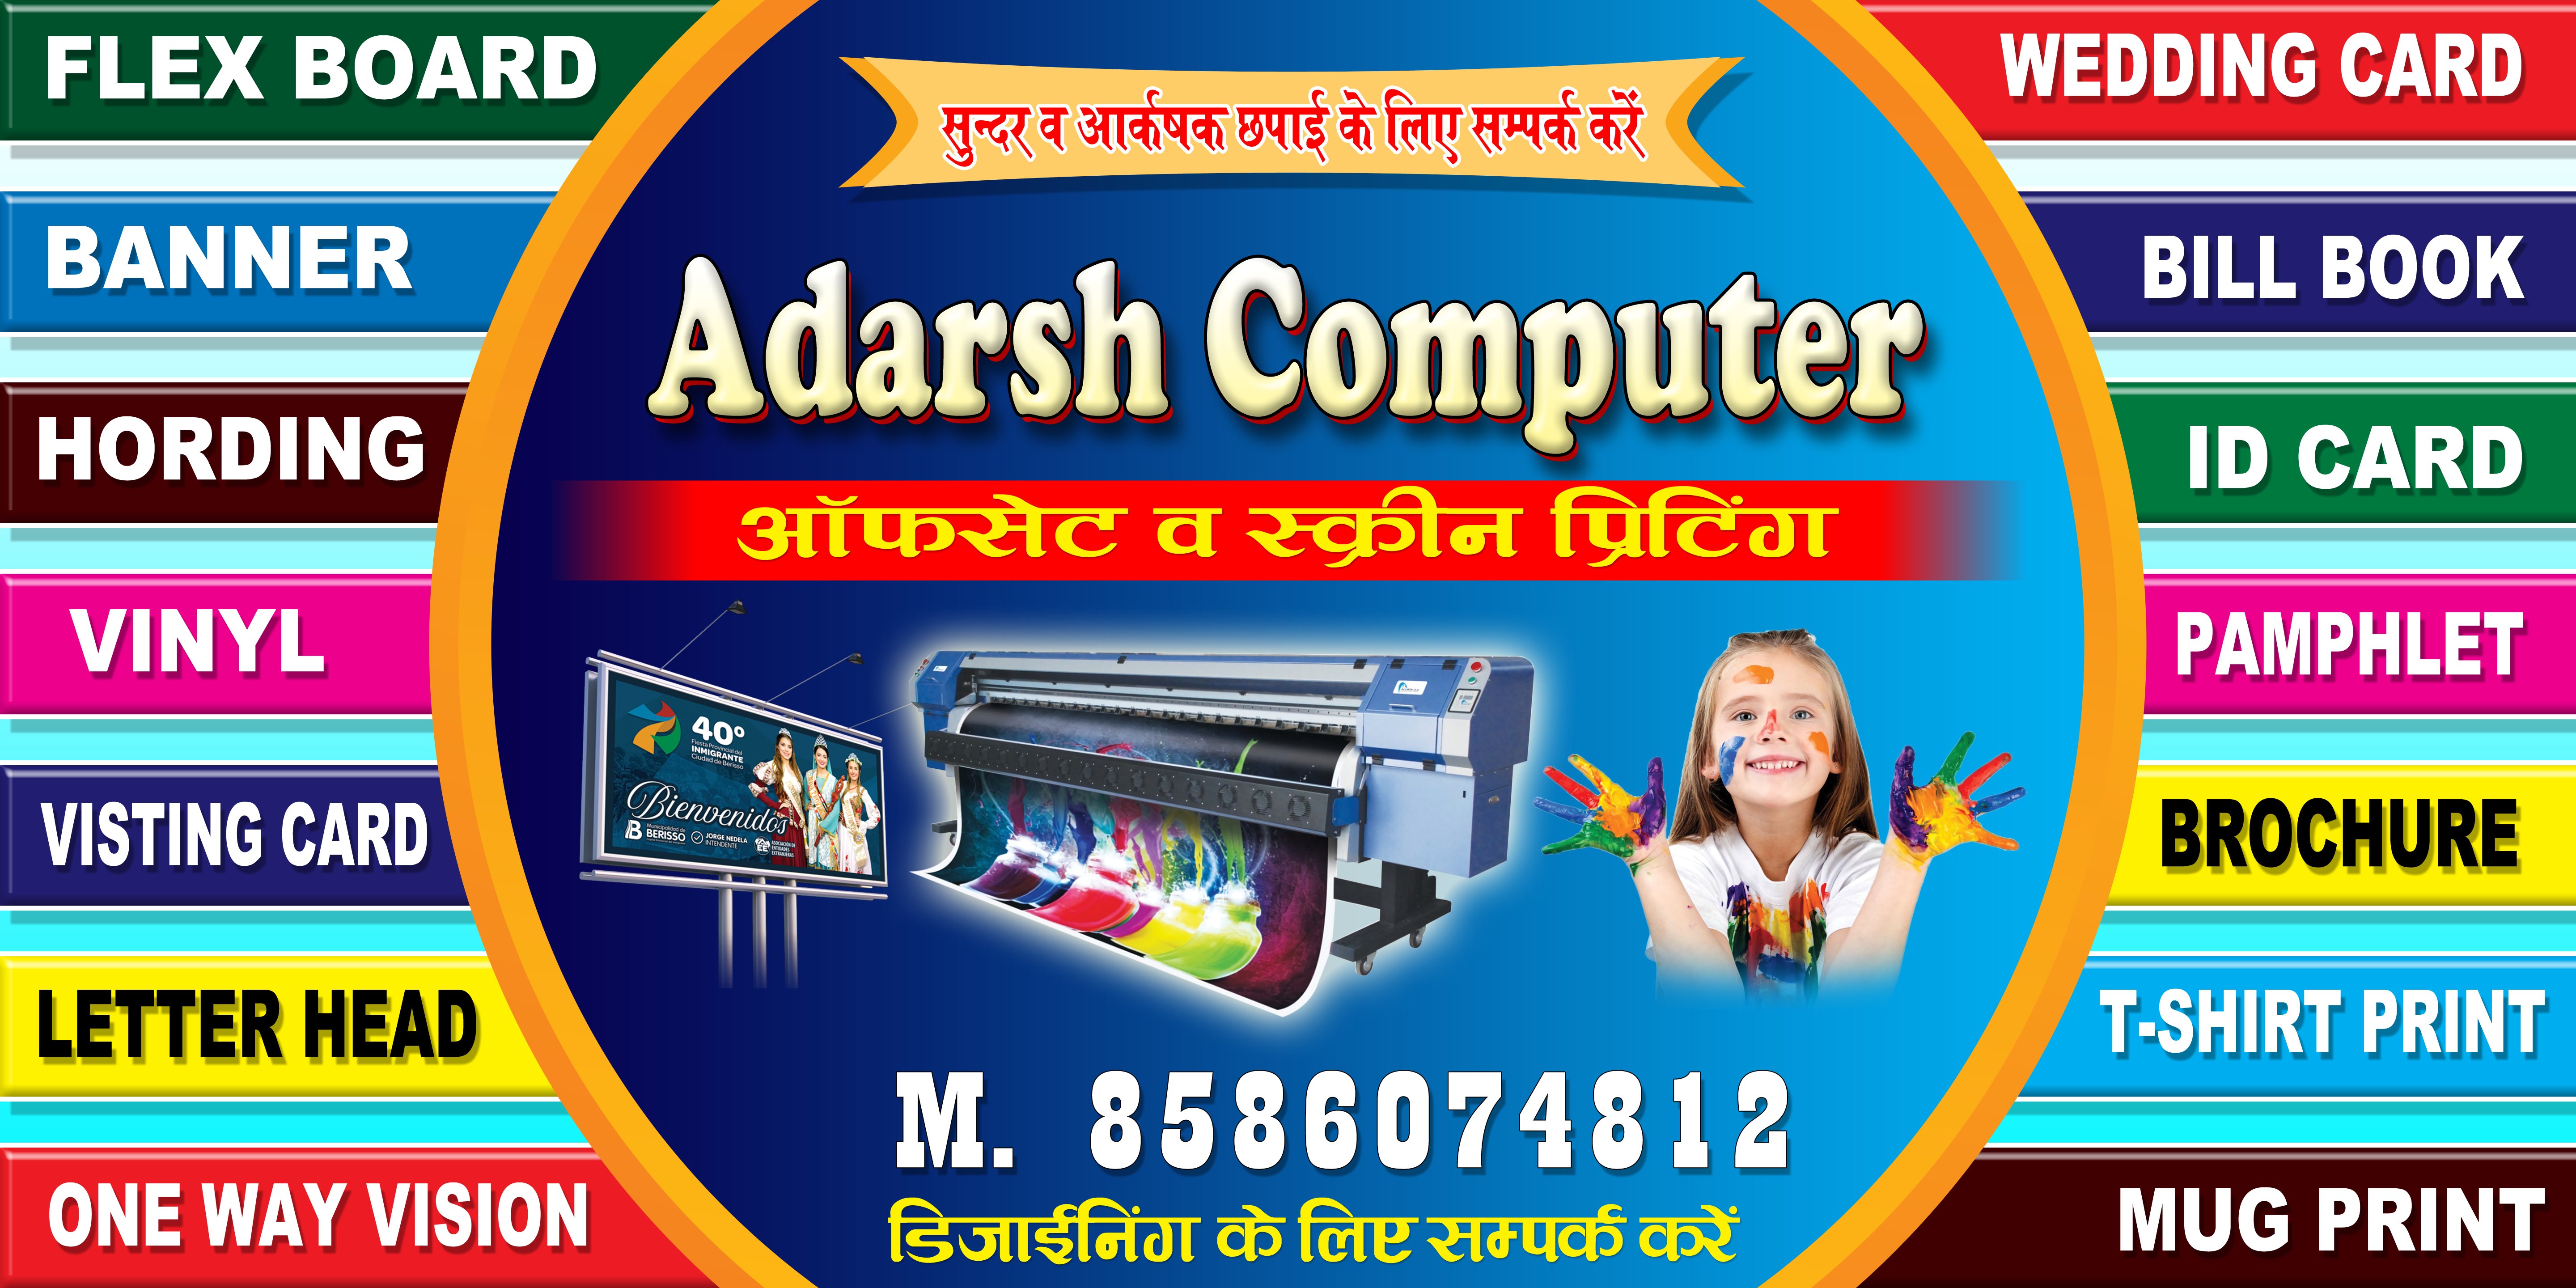 Satyam Printer